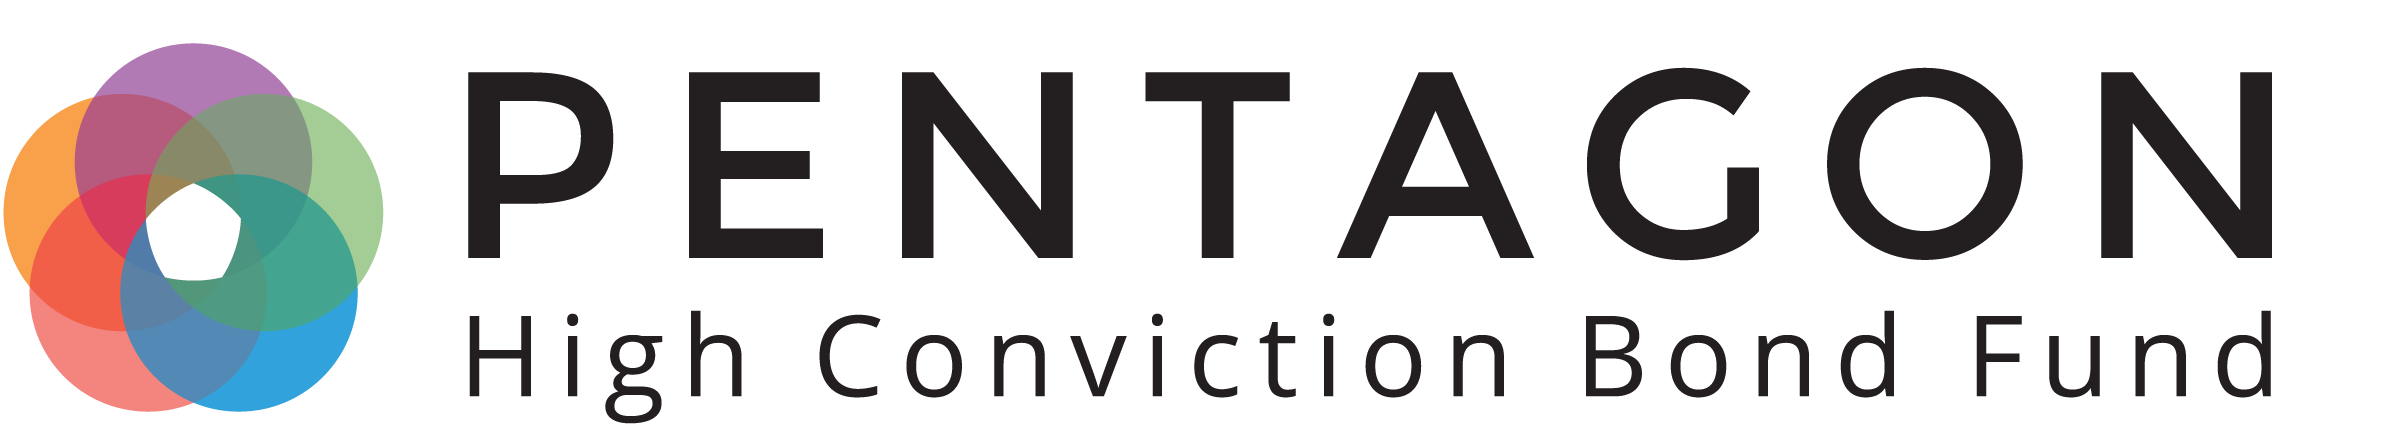 Pentagon High Conviction Bond Fund logo